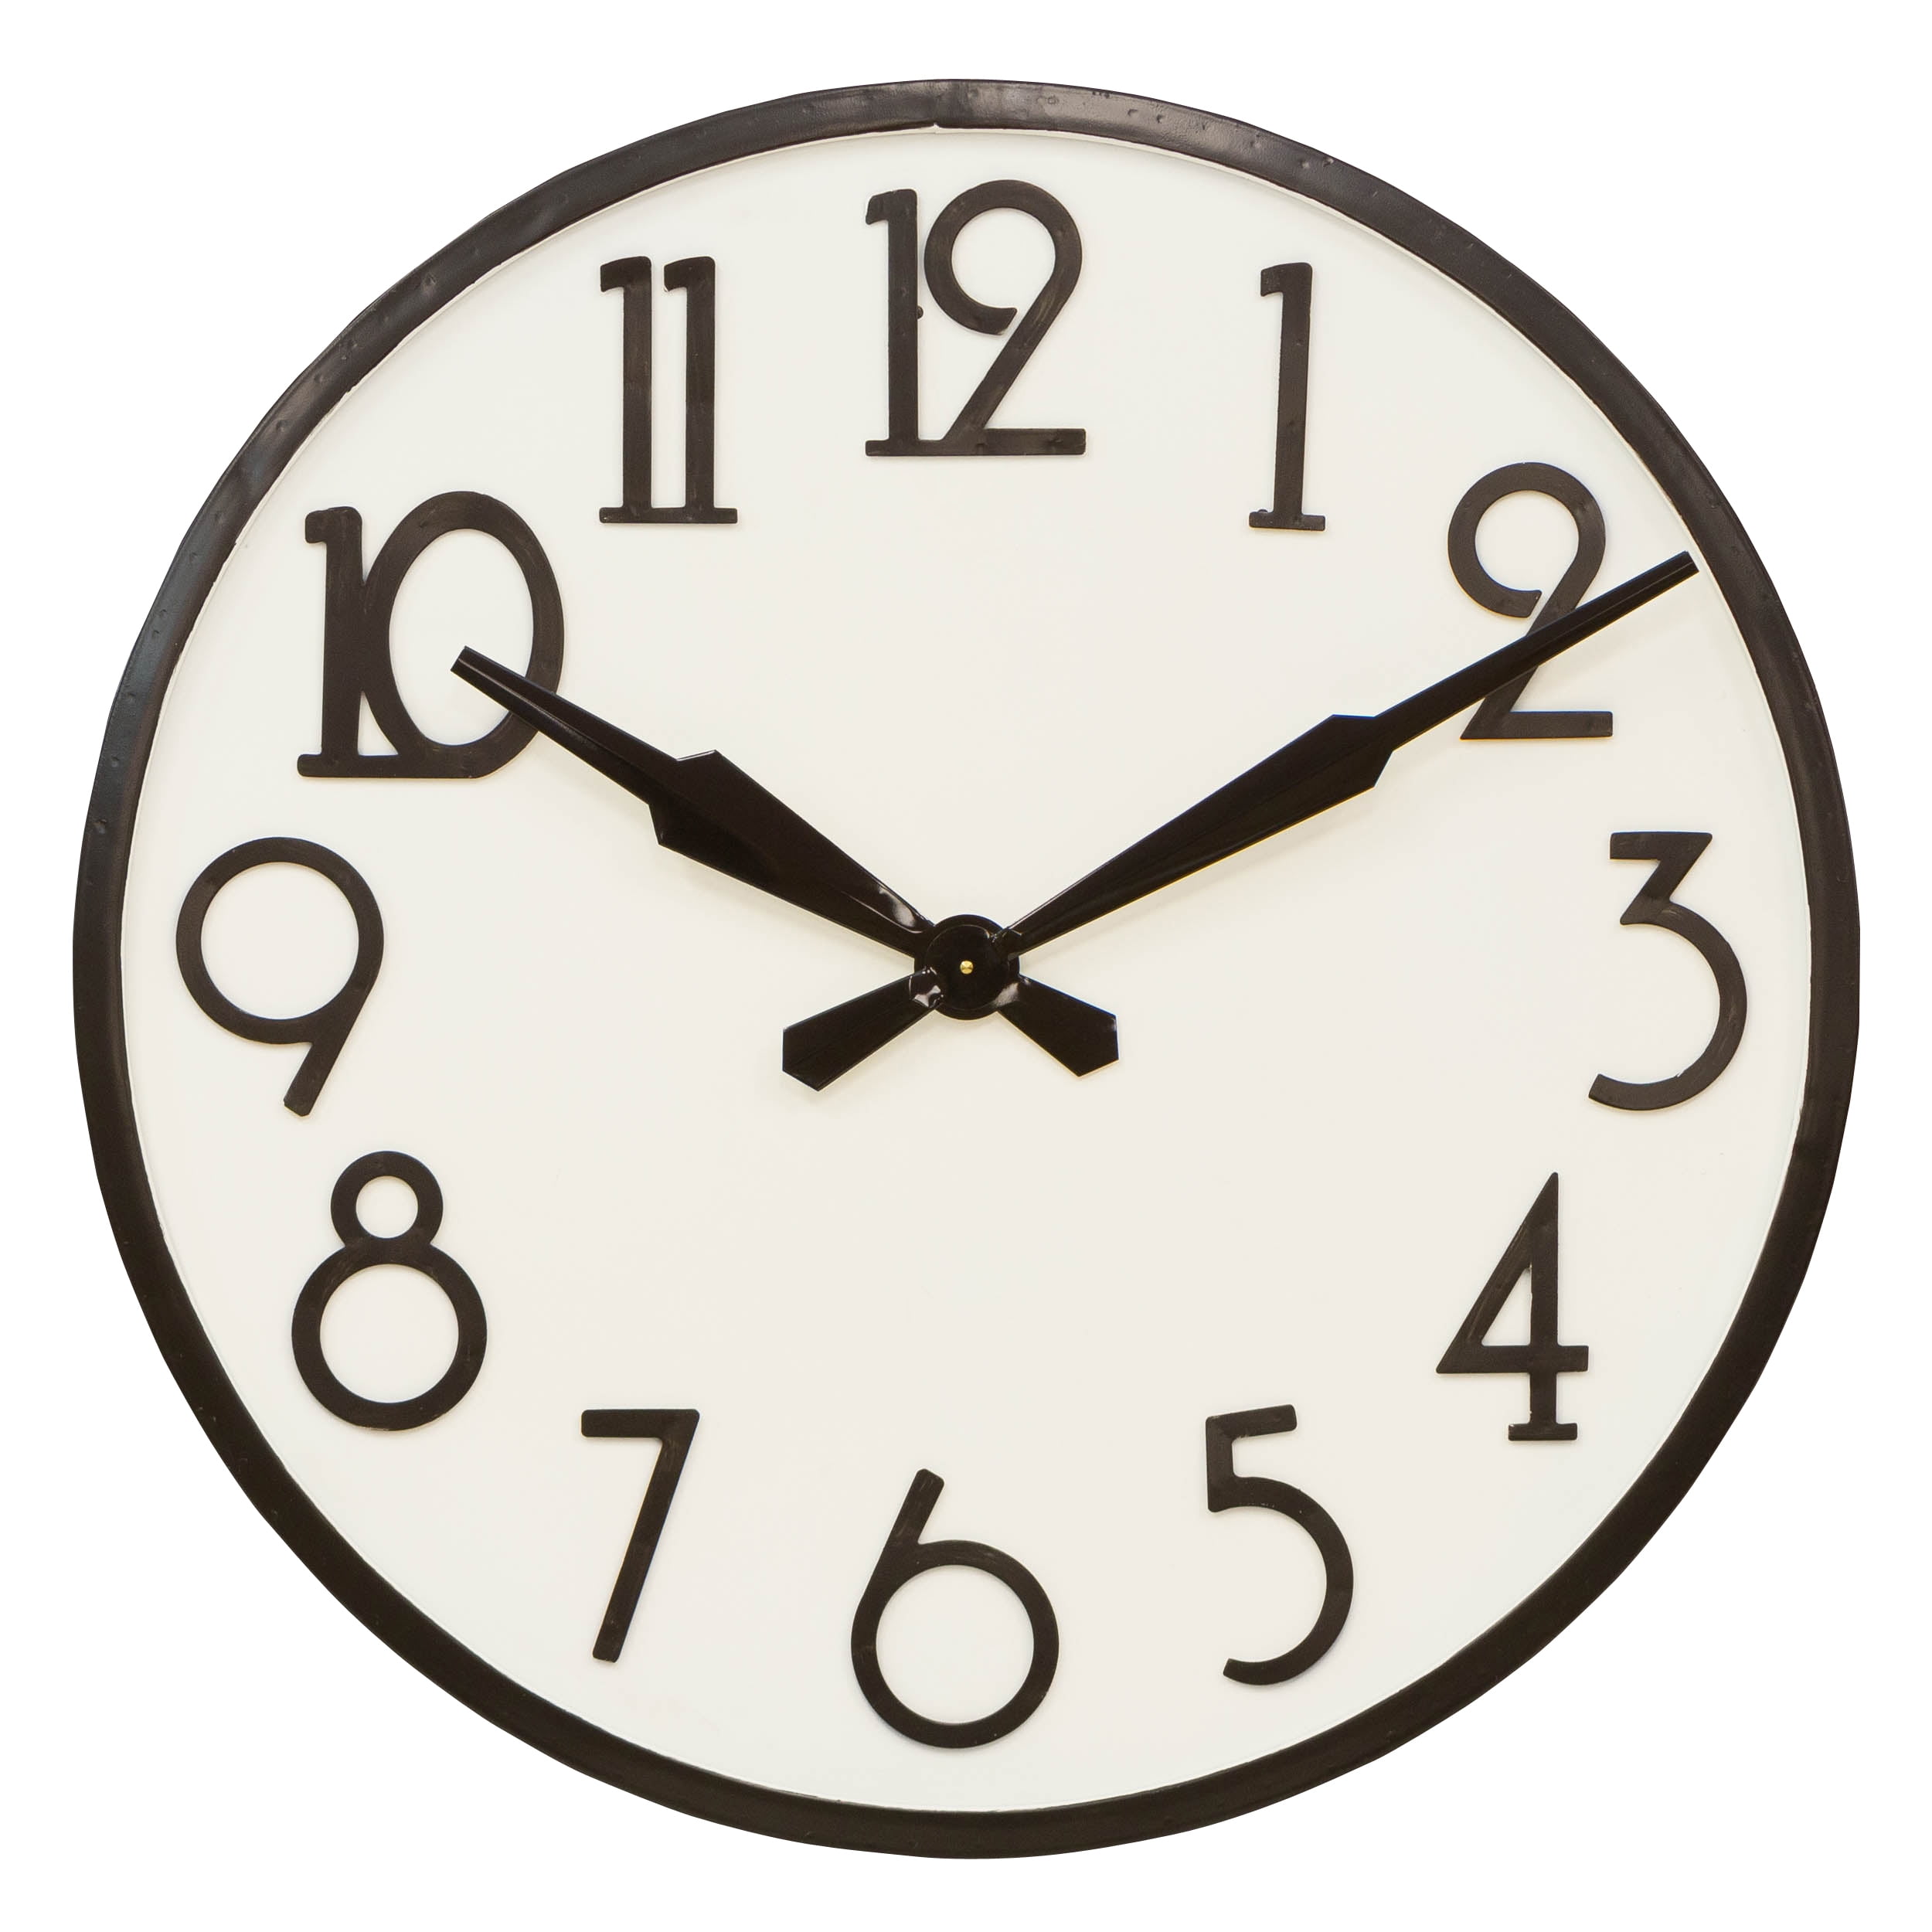 4494 Home D\u00e9cor Clock Large 10.5 Wall Clock Living Room Clock BLUE And WHITE Clock 10.5 WHALE Clock